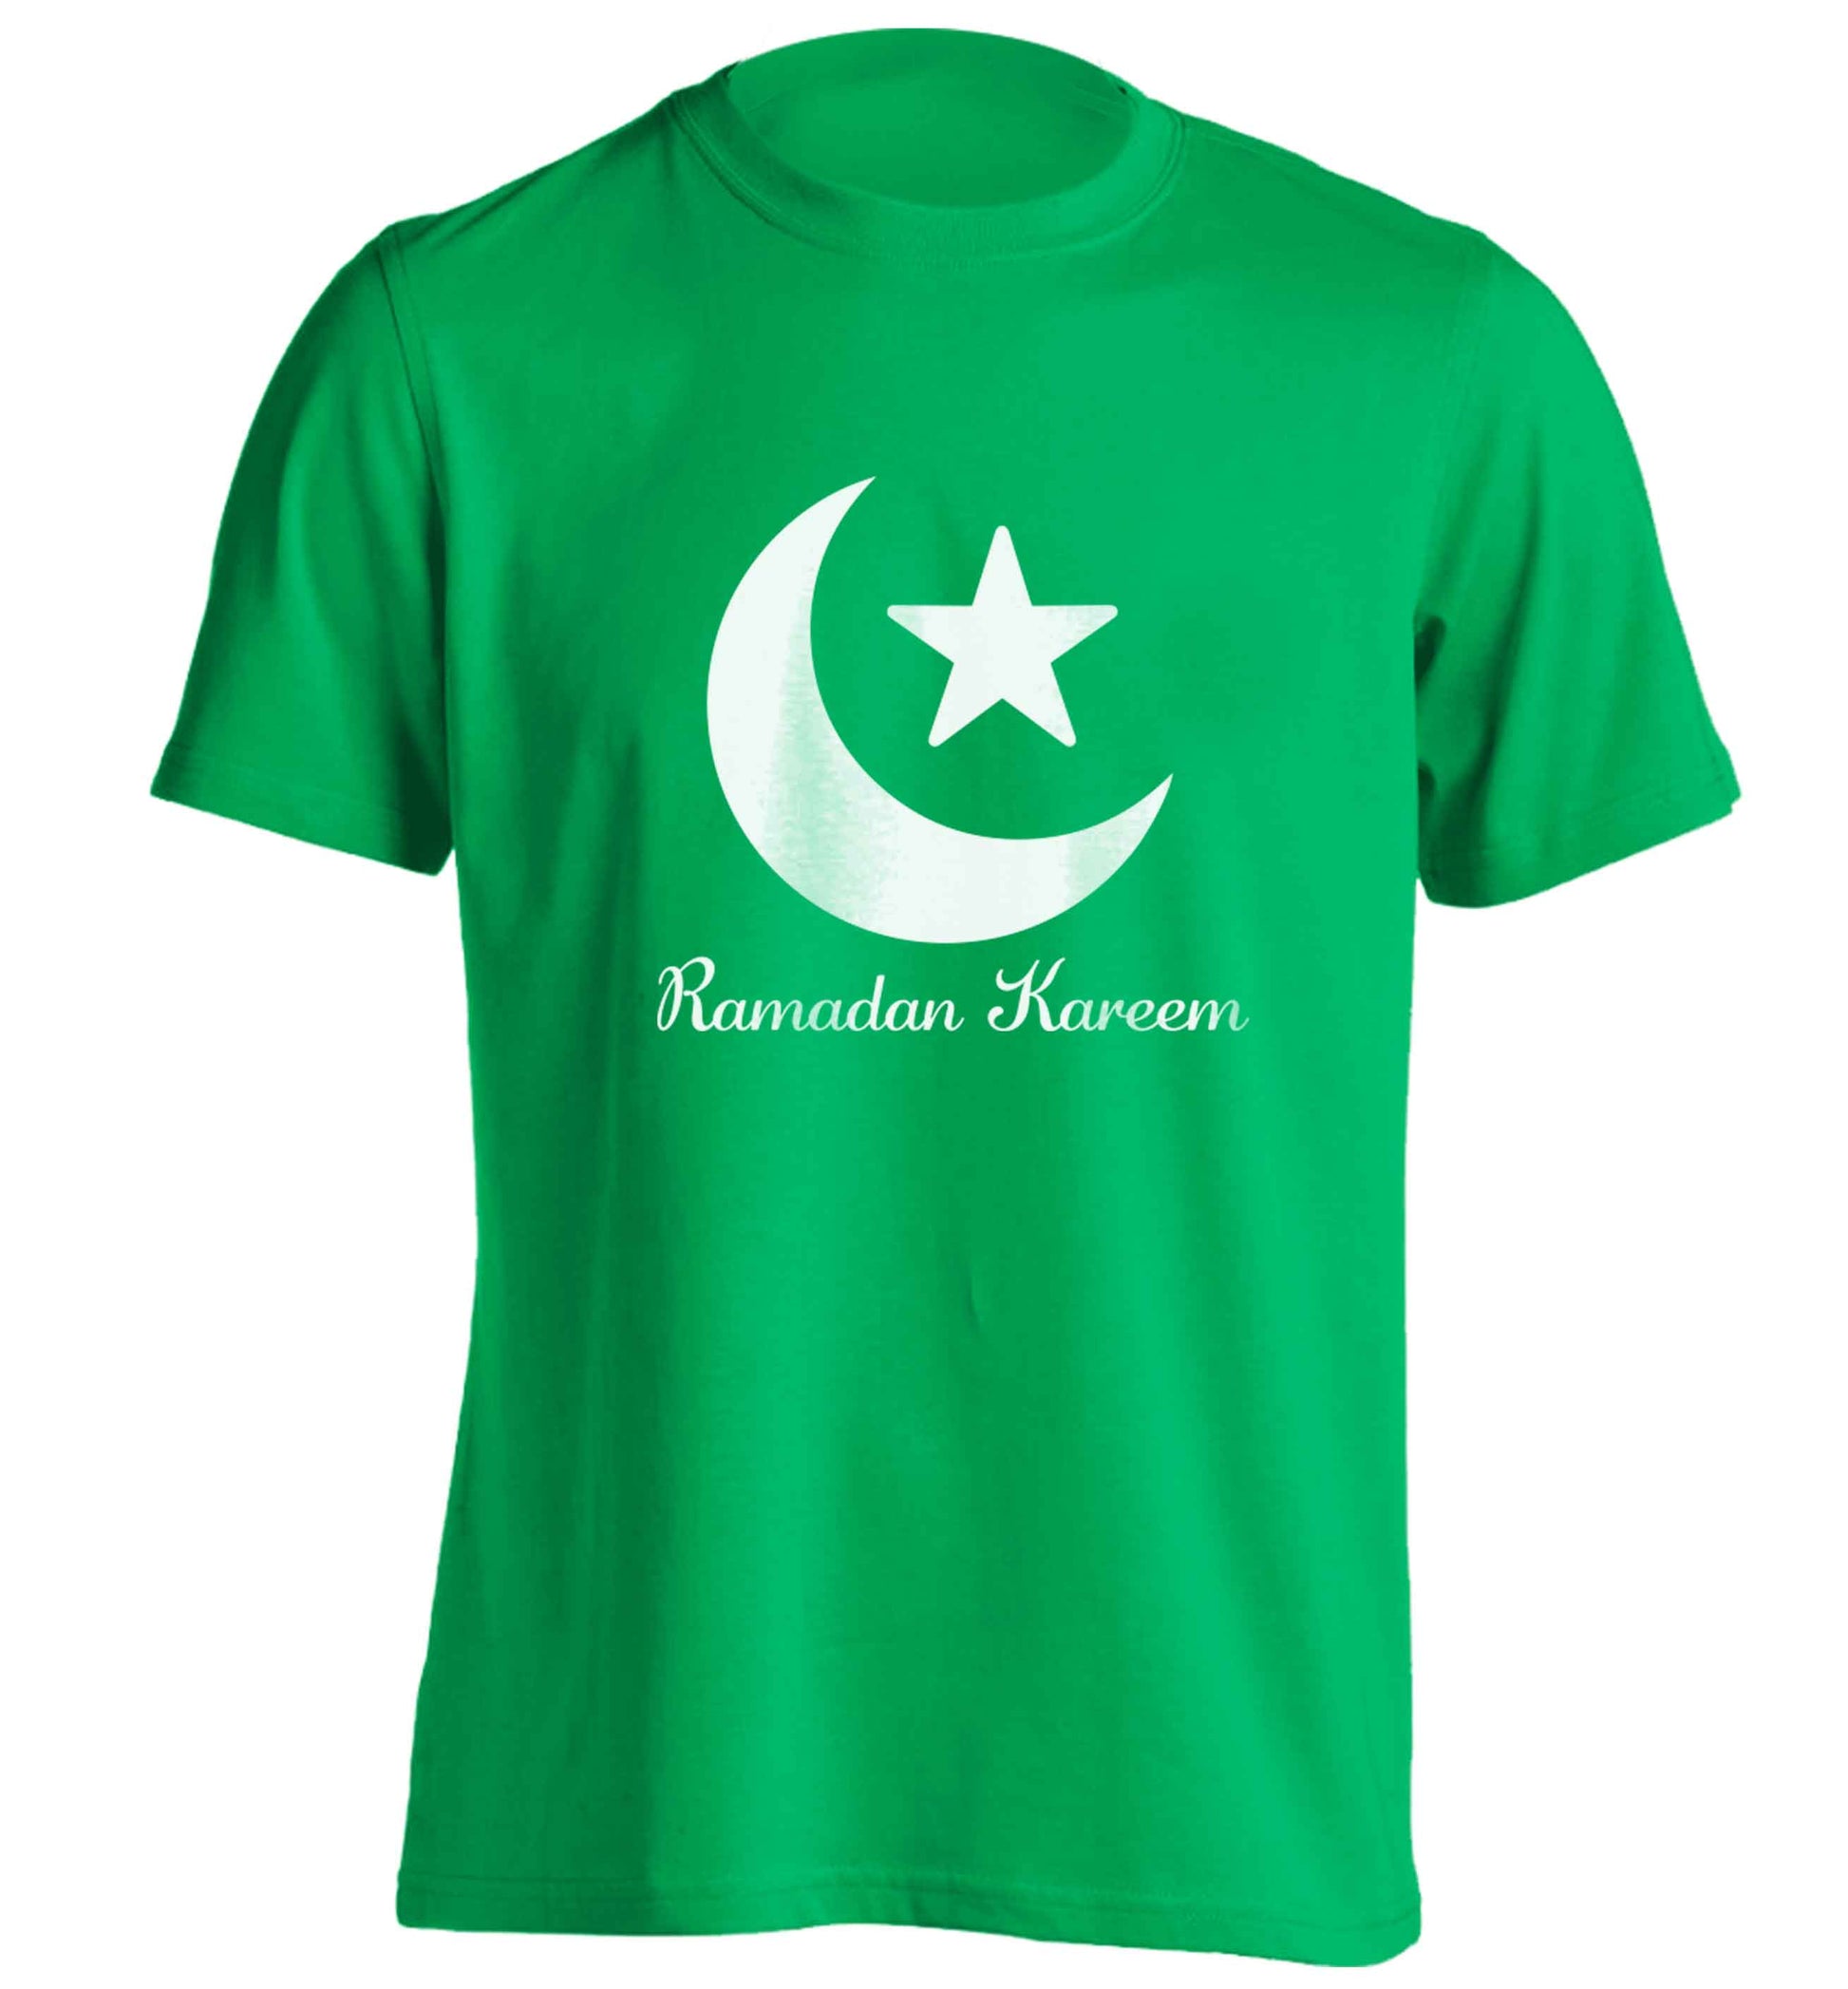 Ramadan kareem adults unisex green Tshirt 2XL